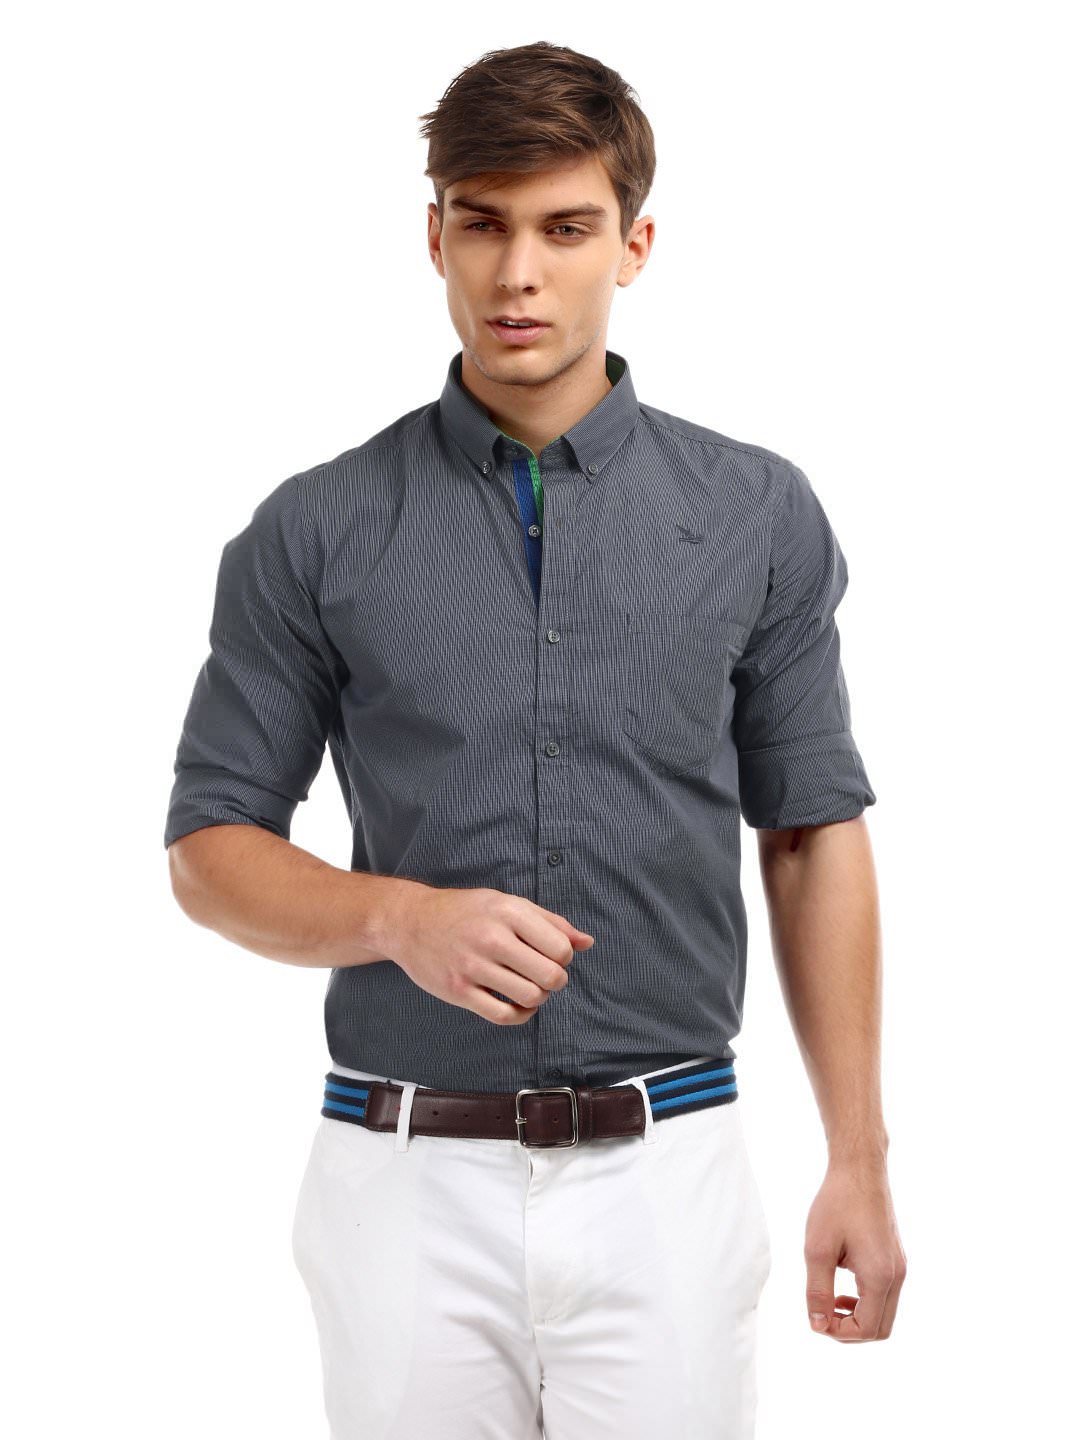 Blue wear перевод. Smart Casual мужской. Mens Smart Casual Wear. Smart Casual для мужчин рубашка. Authentic Casual Wear мужской.